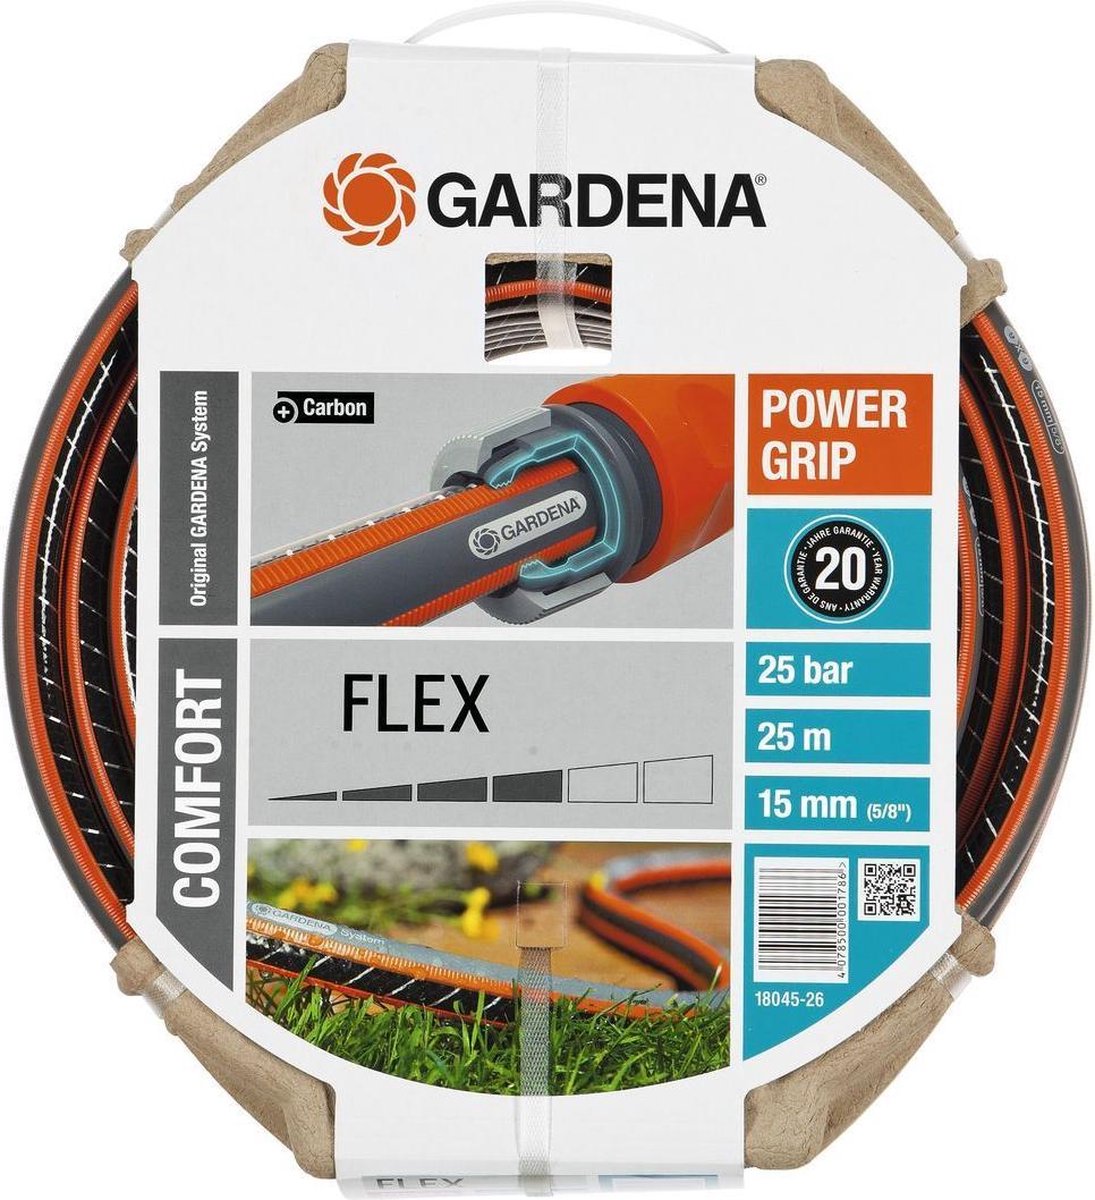 GARDENA Comfort FLEX Tuinslang - 15 mm (5/8